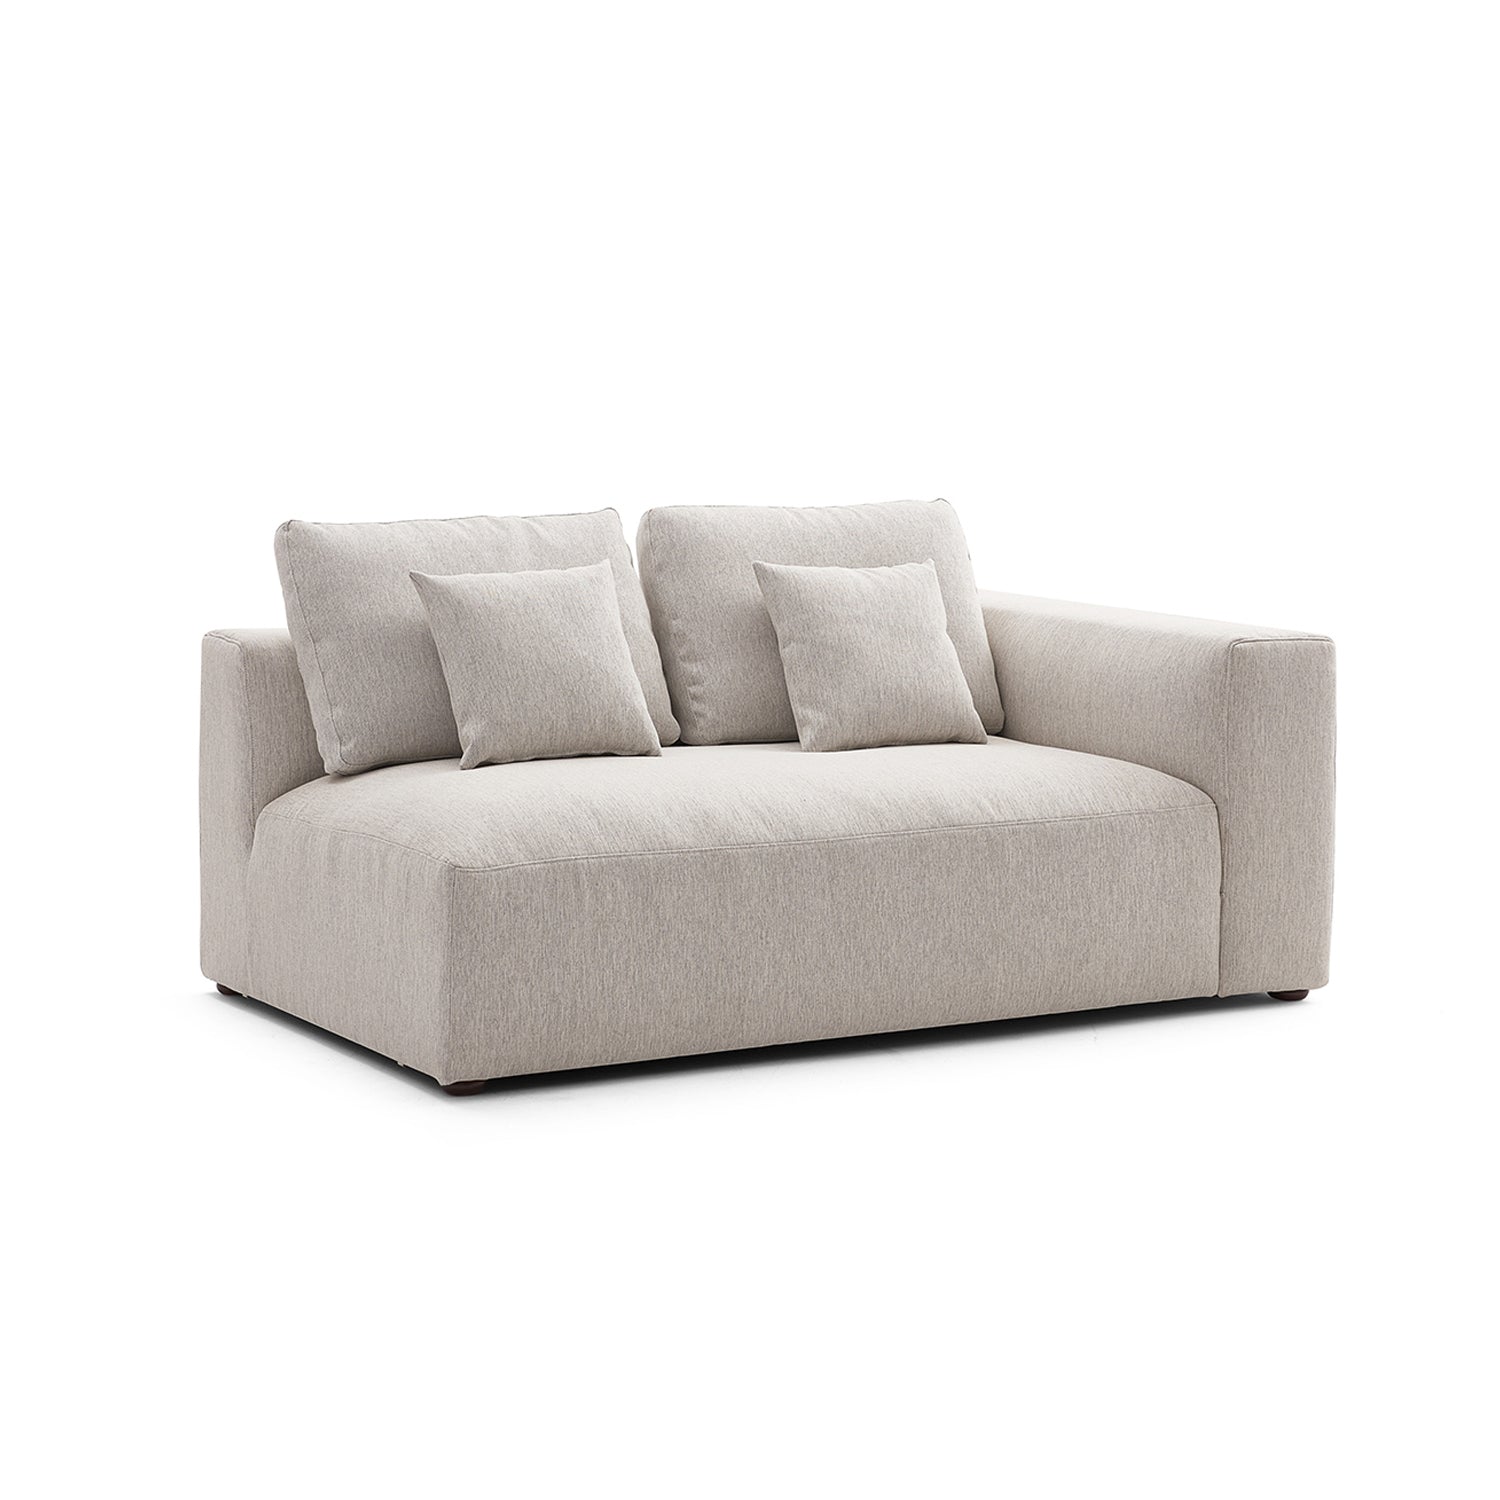 The 5th Side Sofa, Modular Sofa, Foundry | Valyou Furniture 